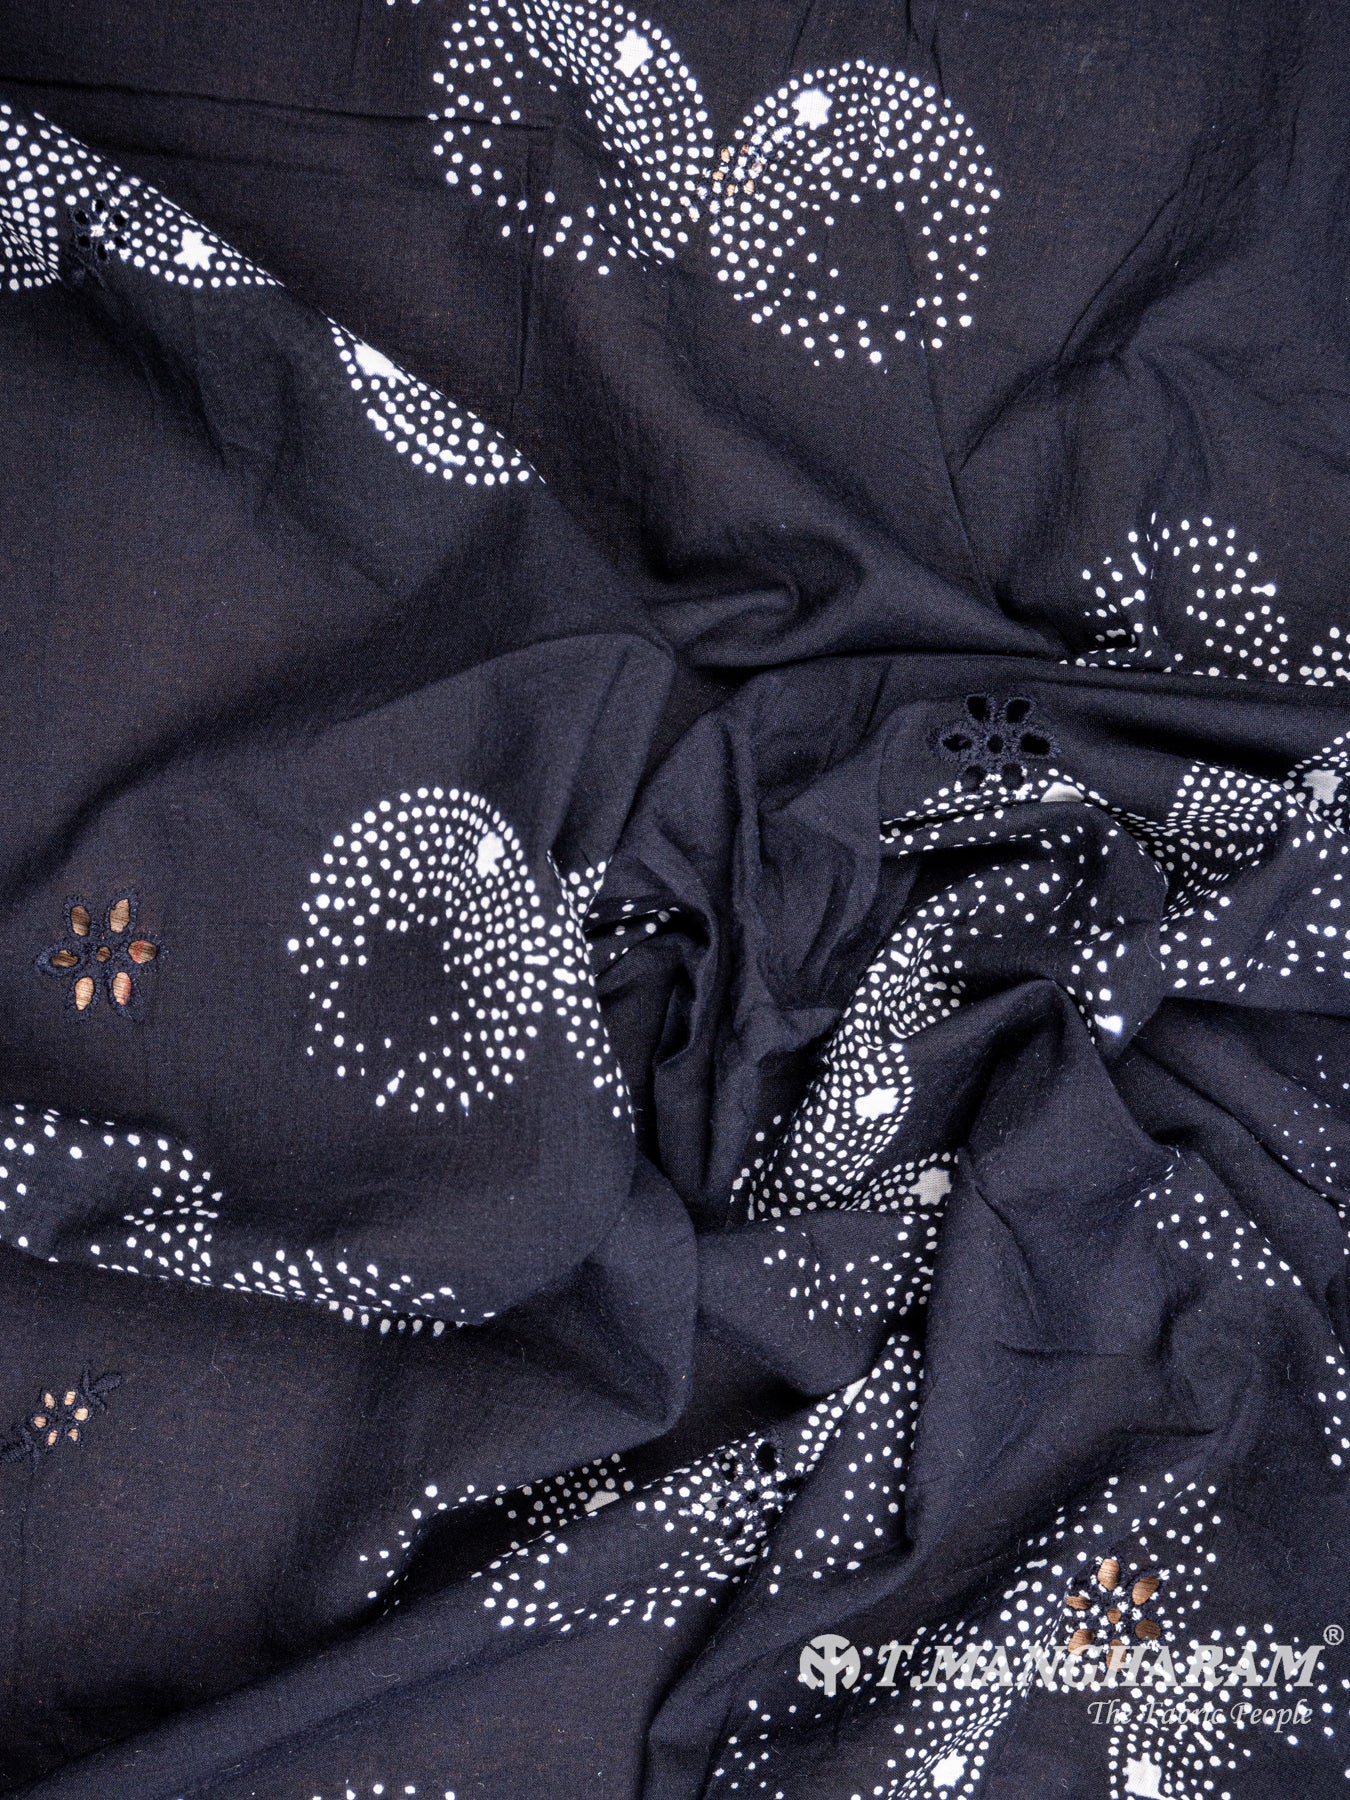 Black Cotton Embroidery Fabric - EA2178 view-4